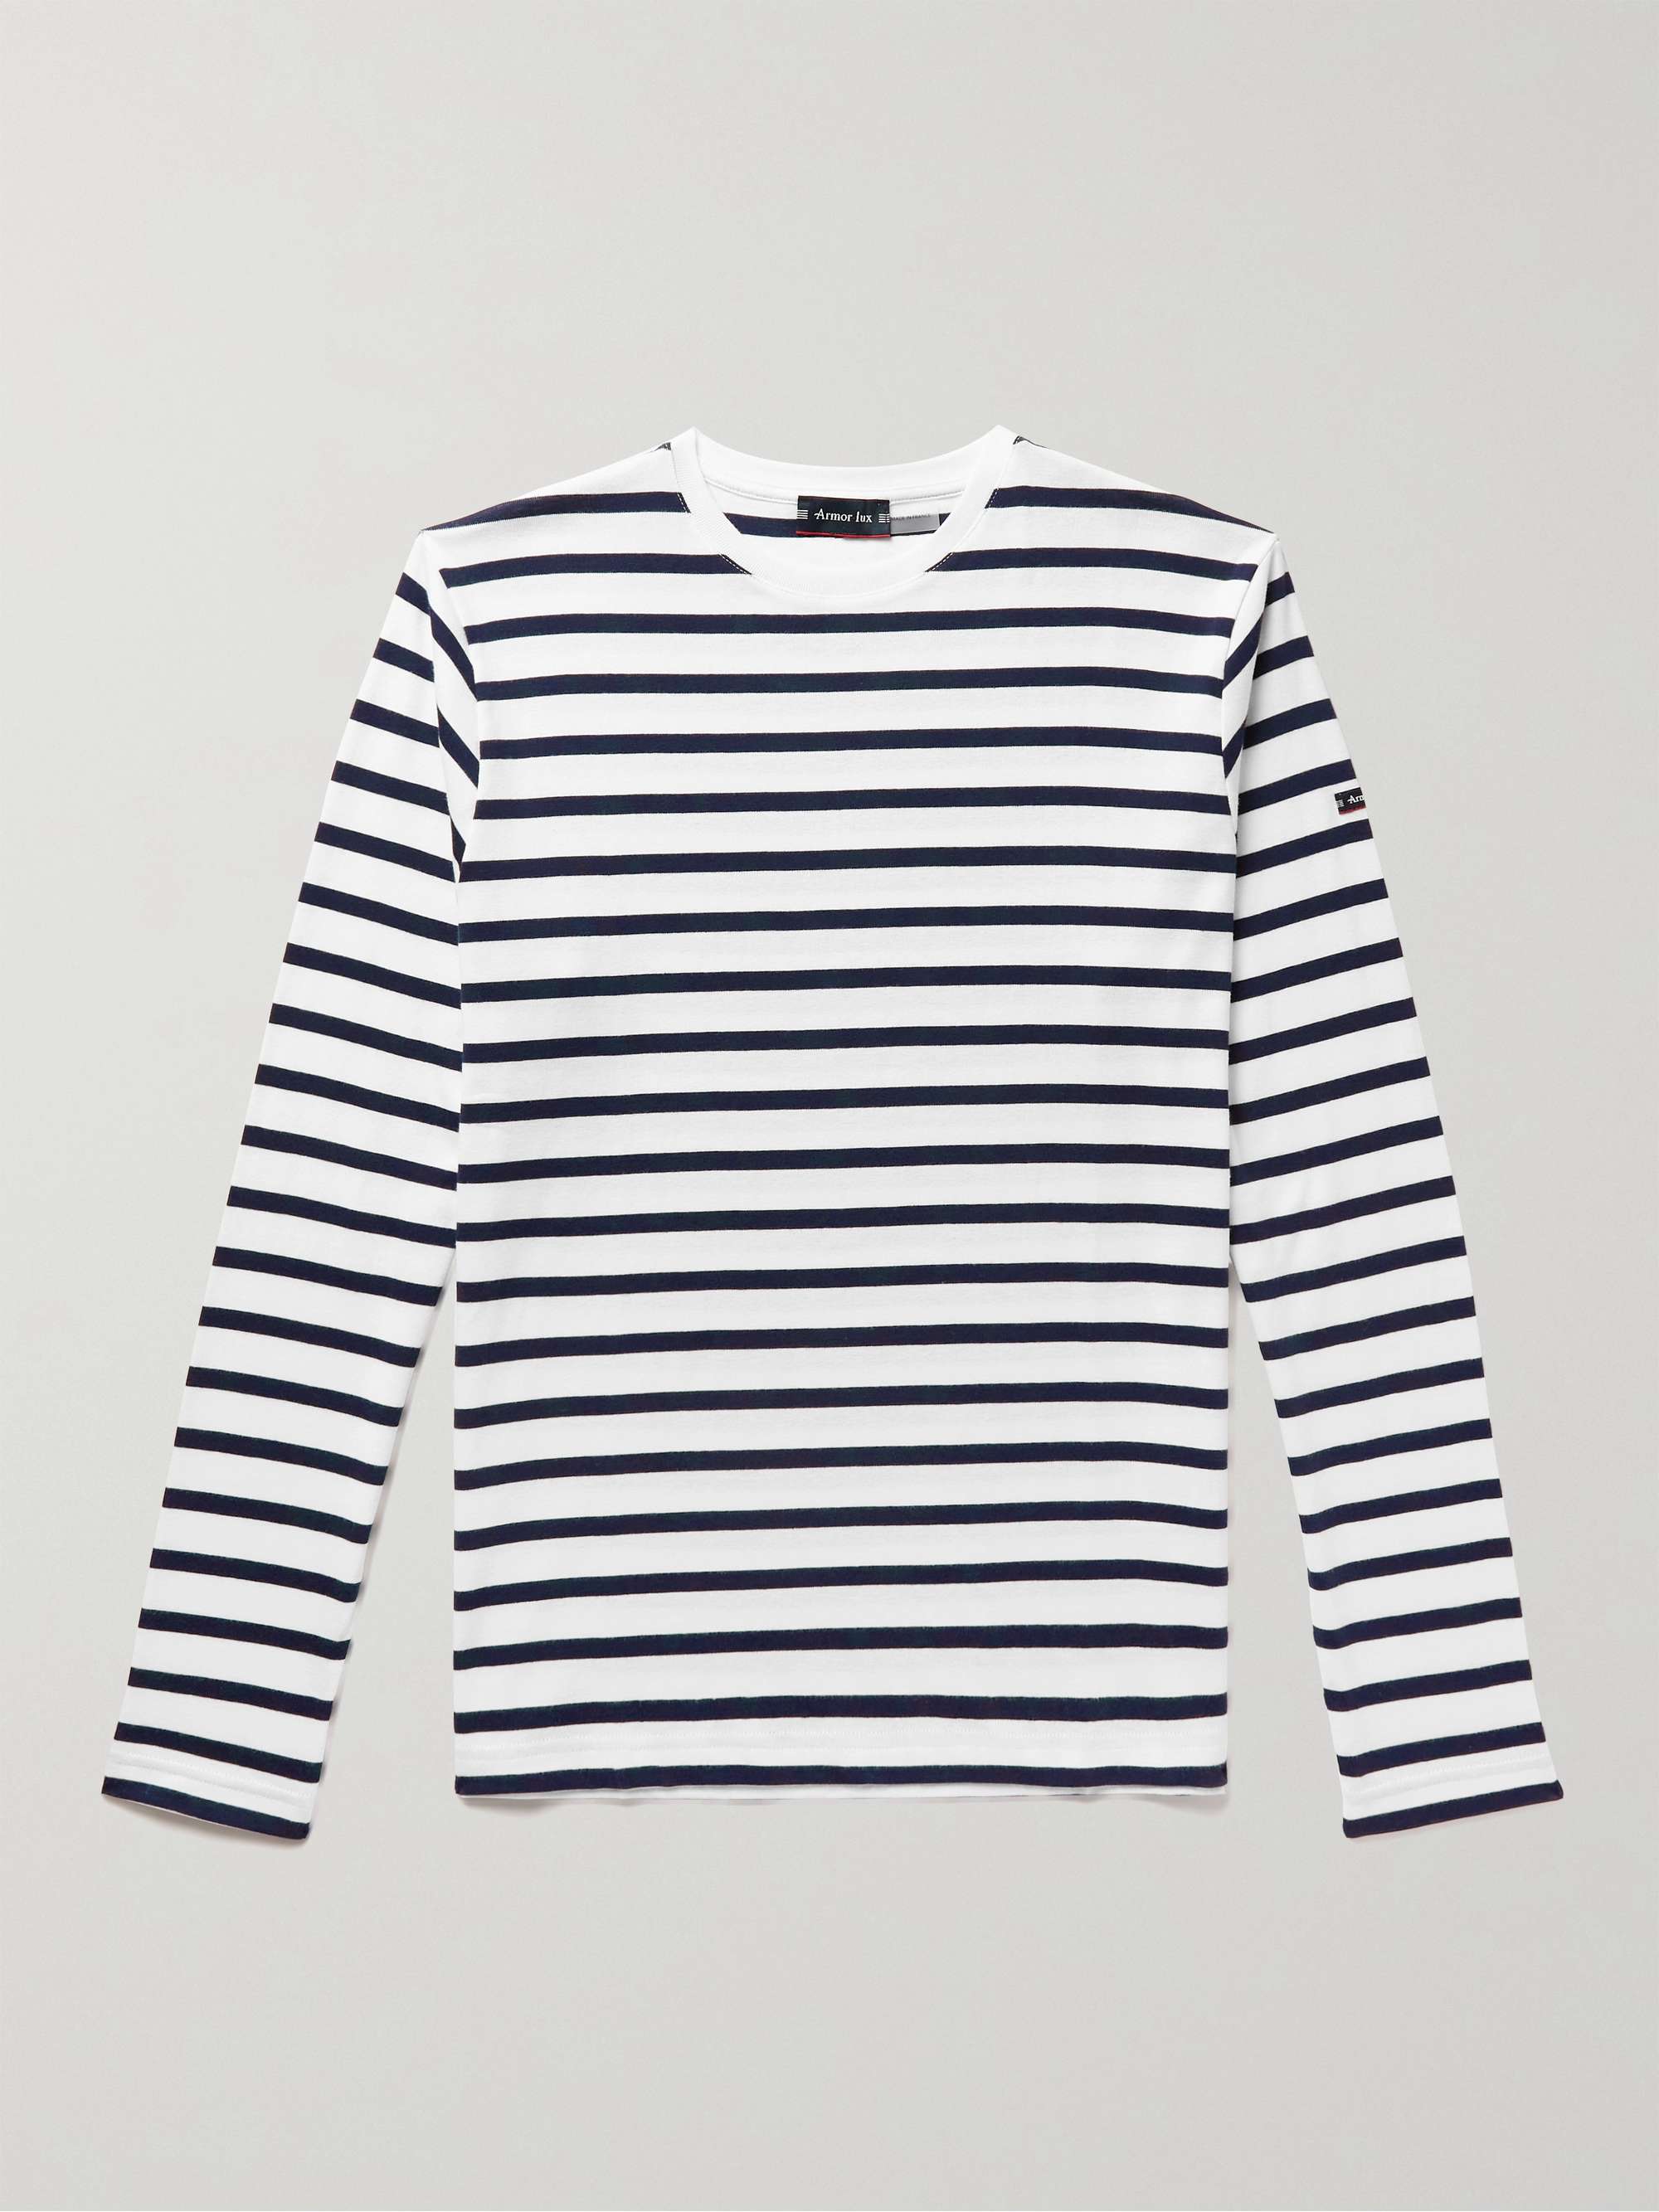 White Slim-Fit Striped Cotton-Jersey T-Shirt | ARMOR-LUX | MR PORTER